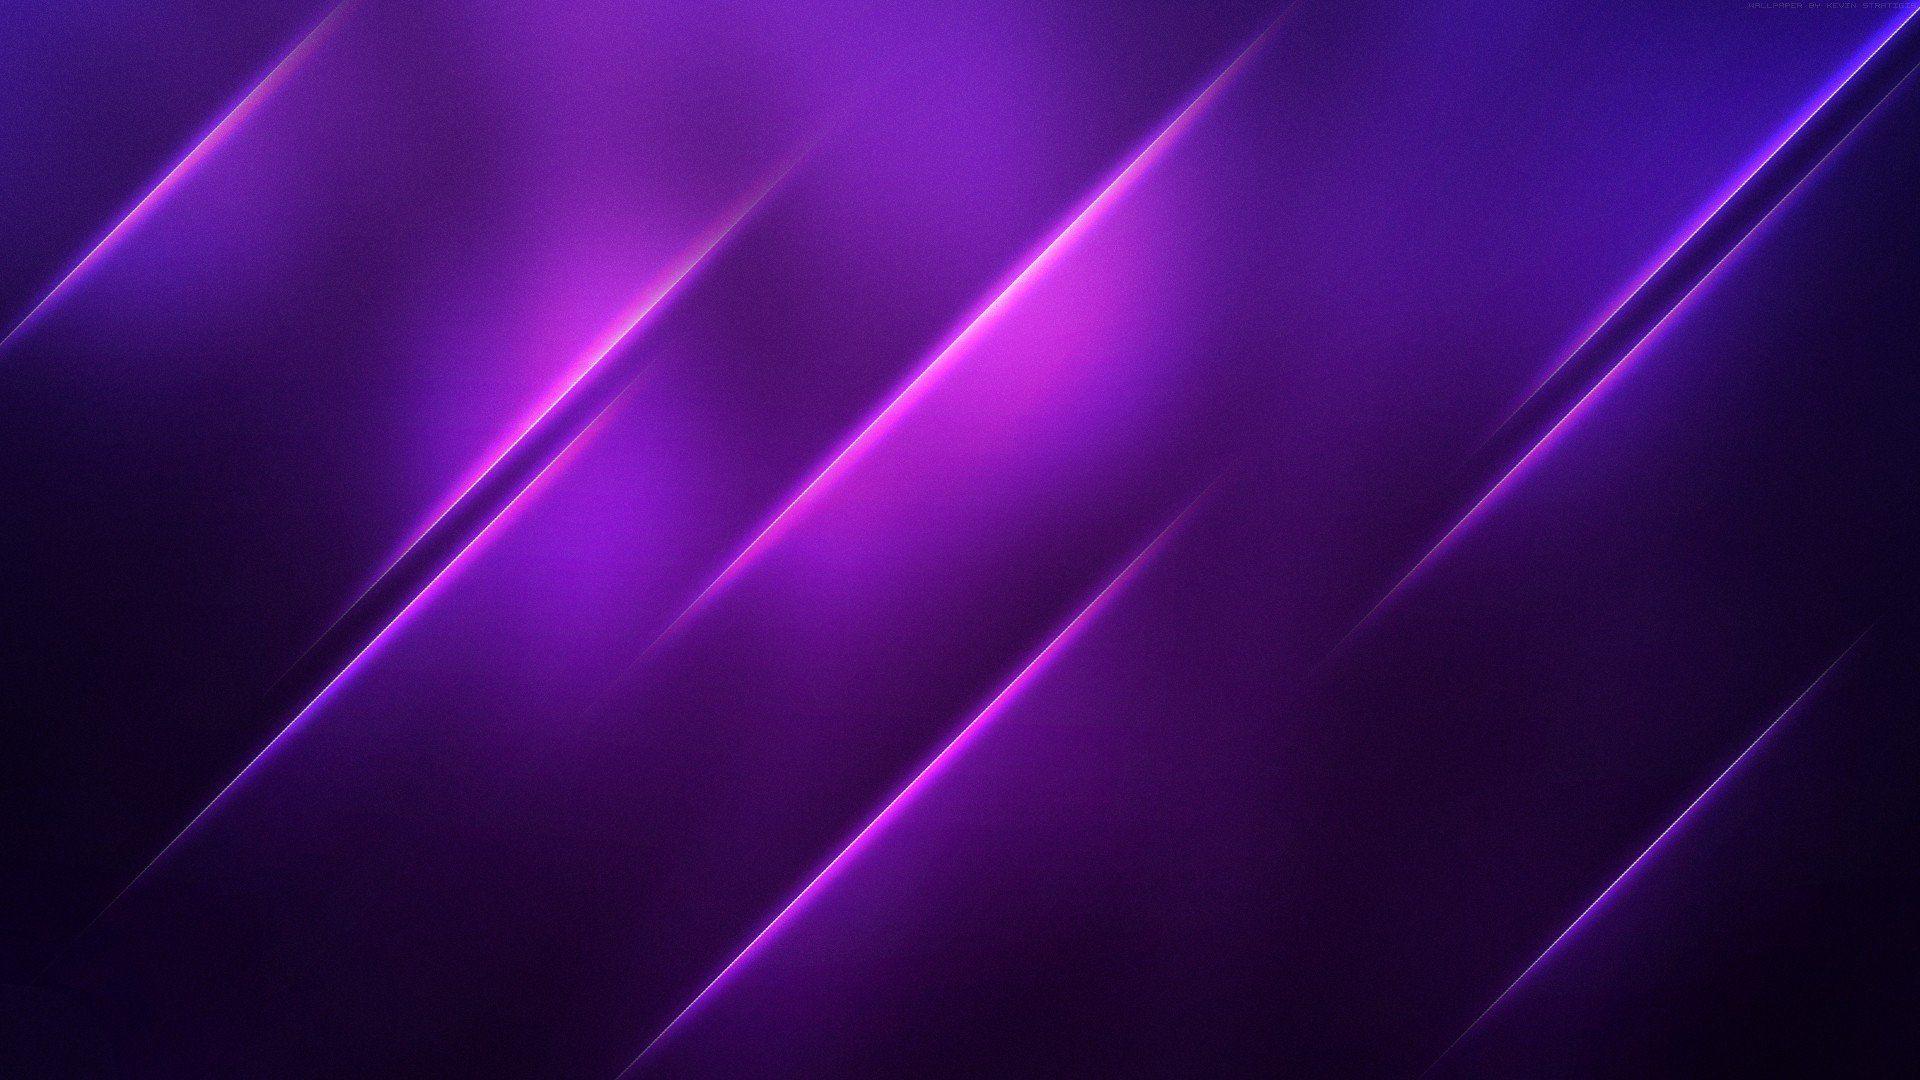 Background warna ungu keren